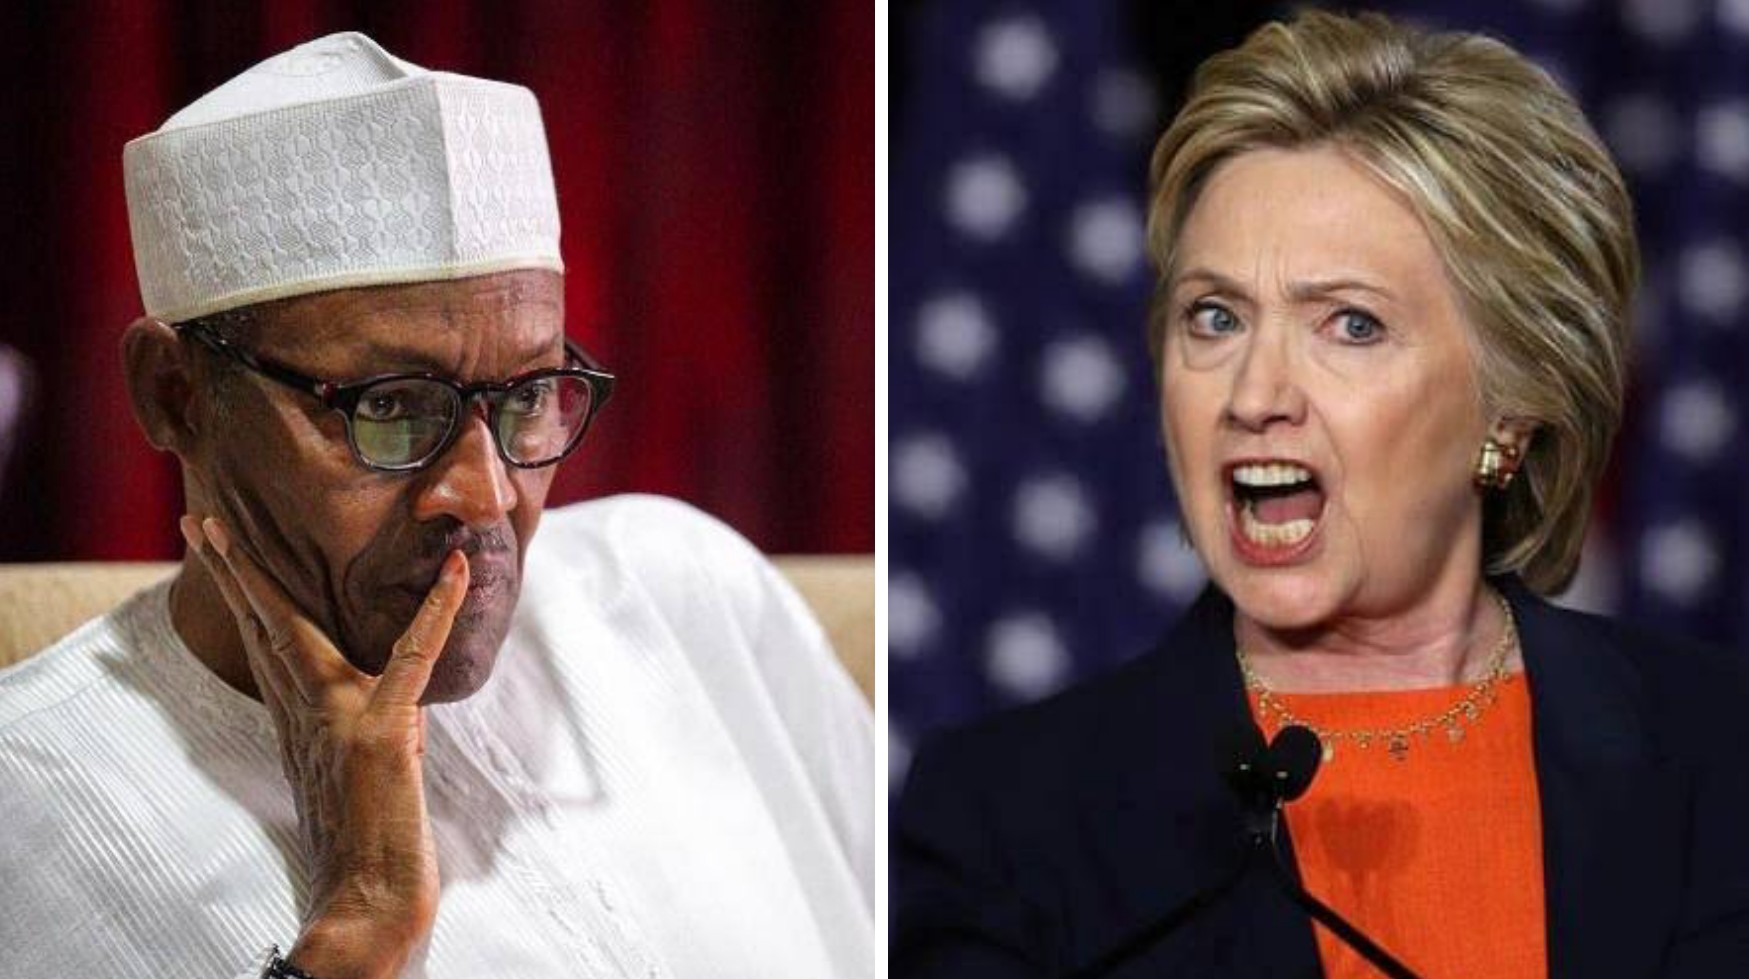 Hillary Clinton tells Buhari to 'stop killing protesters'